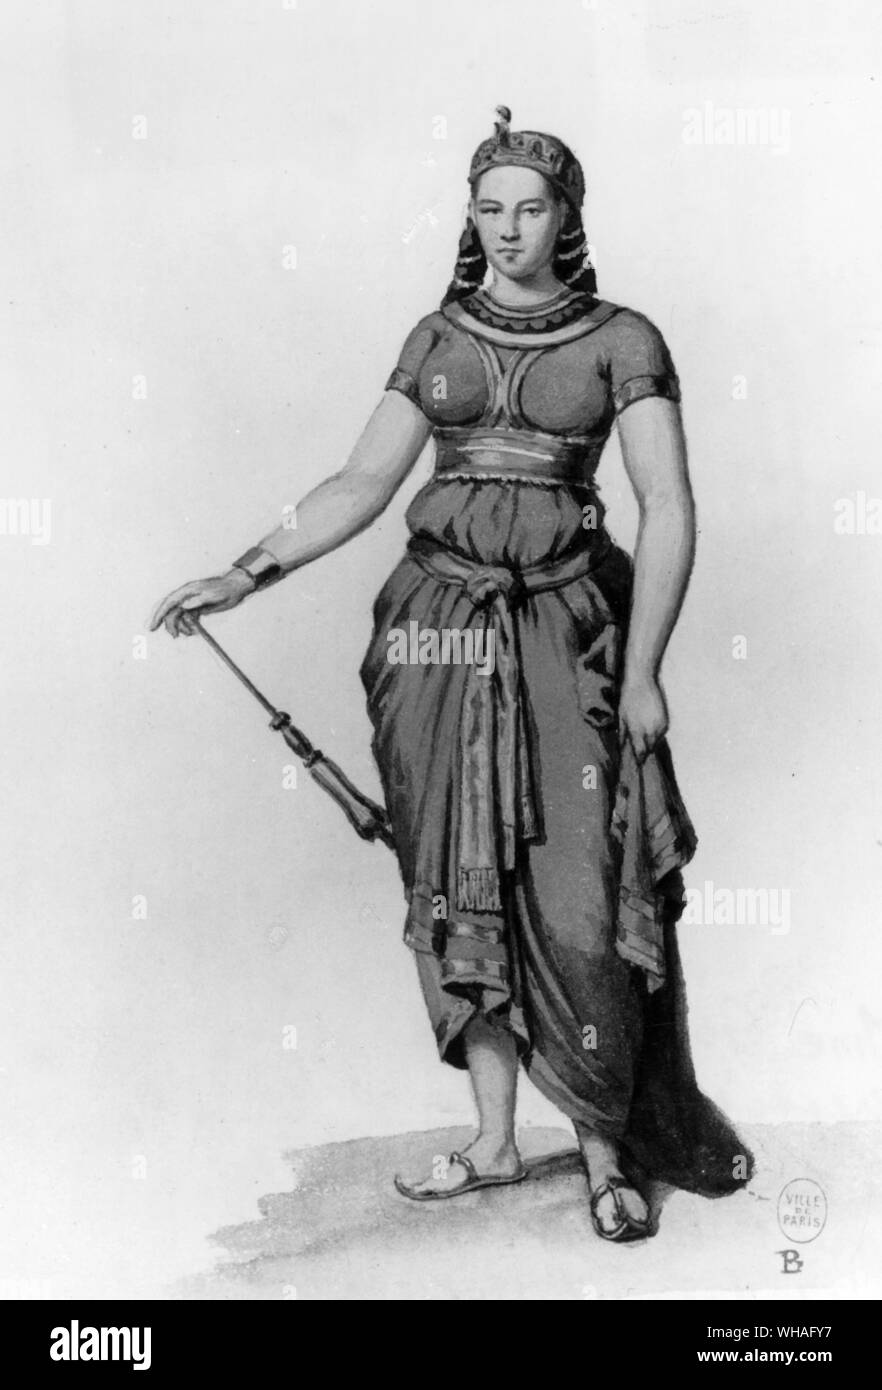 Mme Gorschakoff dressed as Salambo the heroine of Flaubert's novel set in carthage. Stock Photo